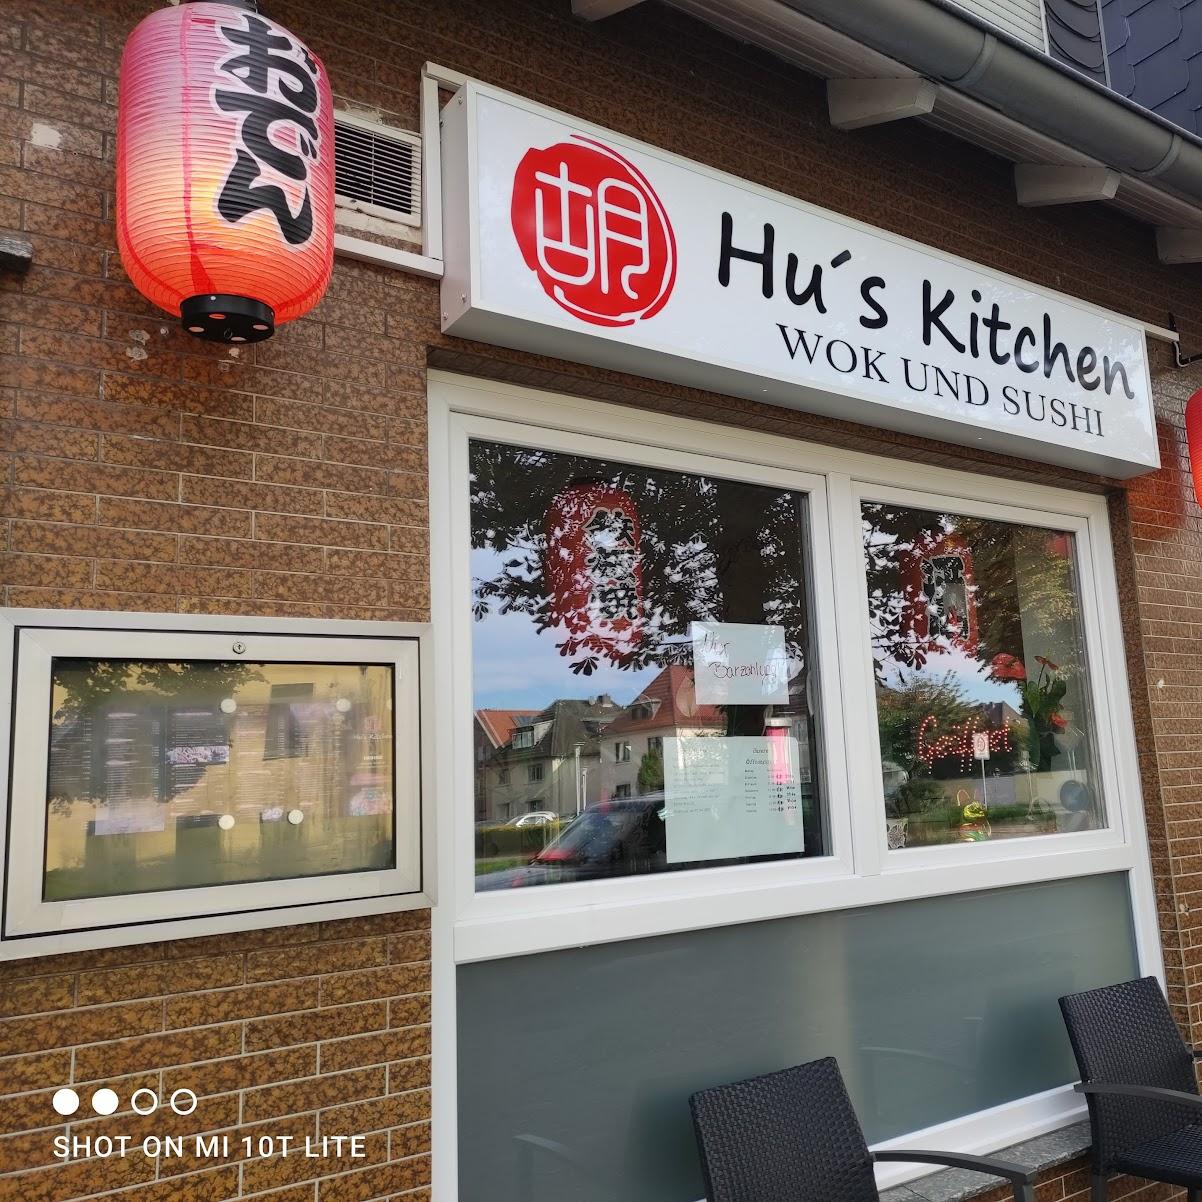 Restaurant "Hu